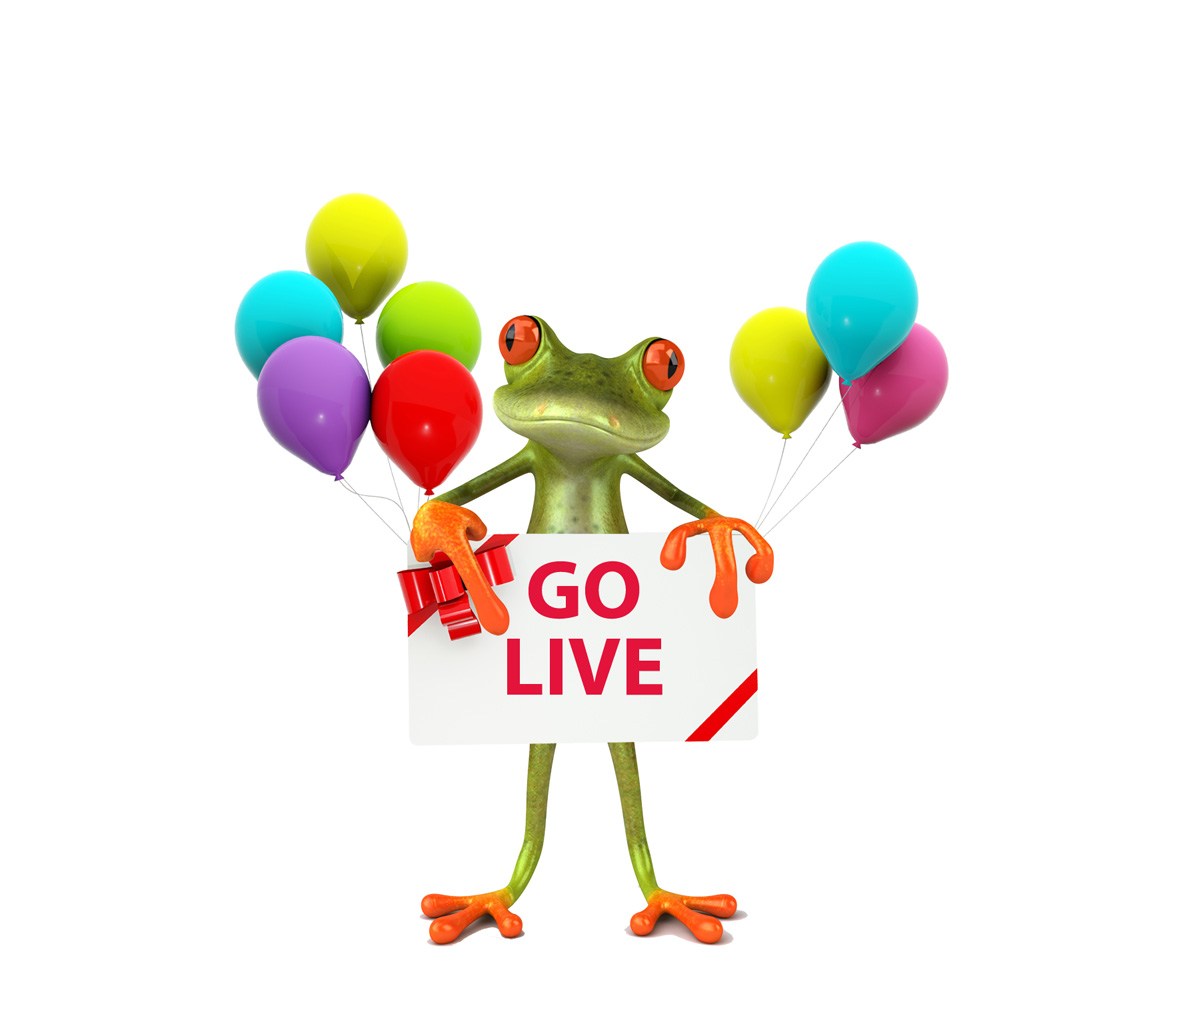 Go live how. Go Live. Изображение go Live. Картинка going Live. Go Live support.